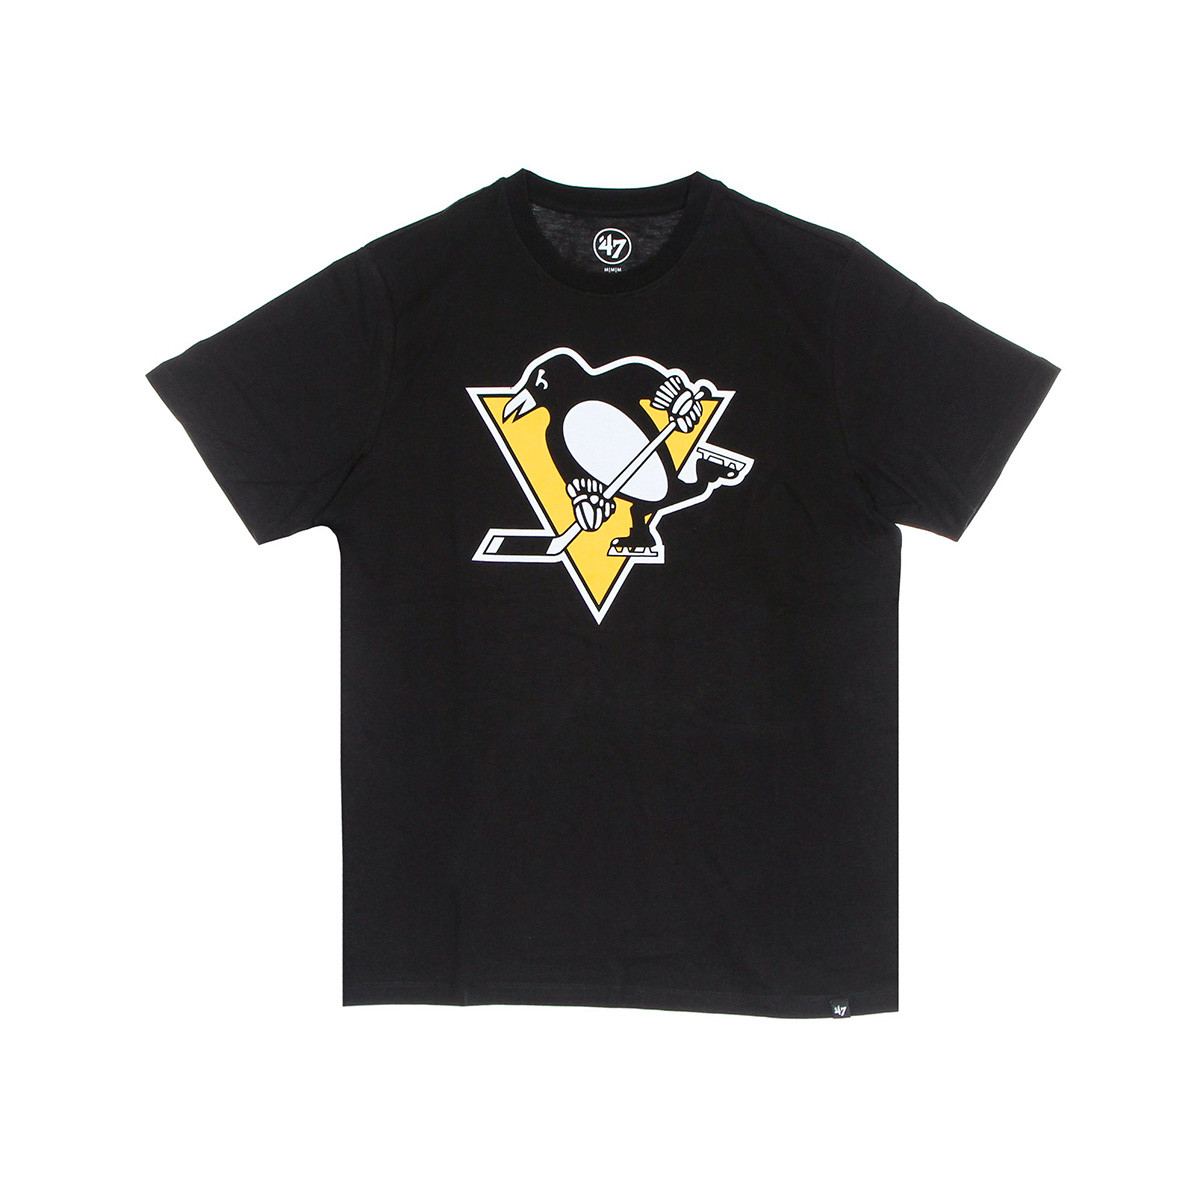 Pittsburgh Penguins Youth Medium T Shirt Hockey NHL It's A